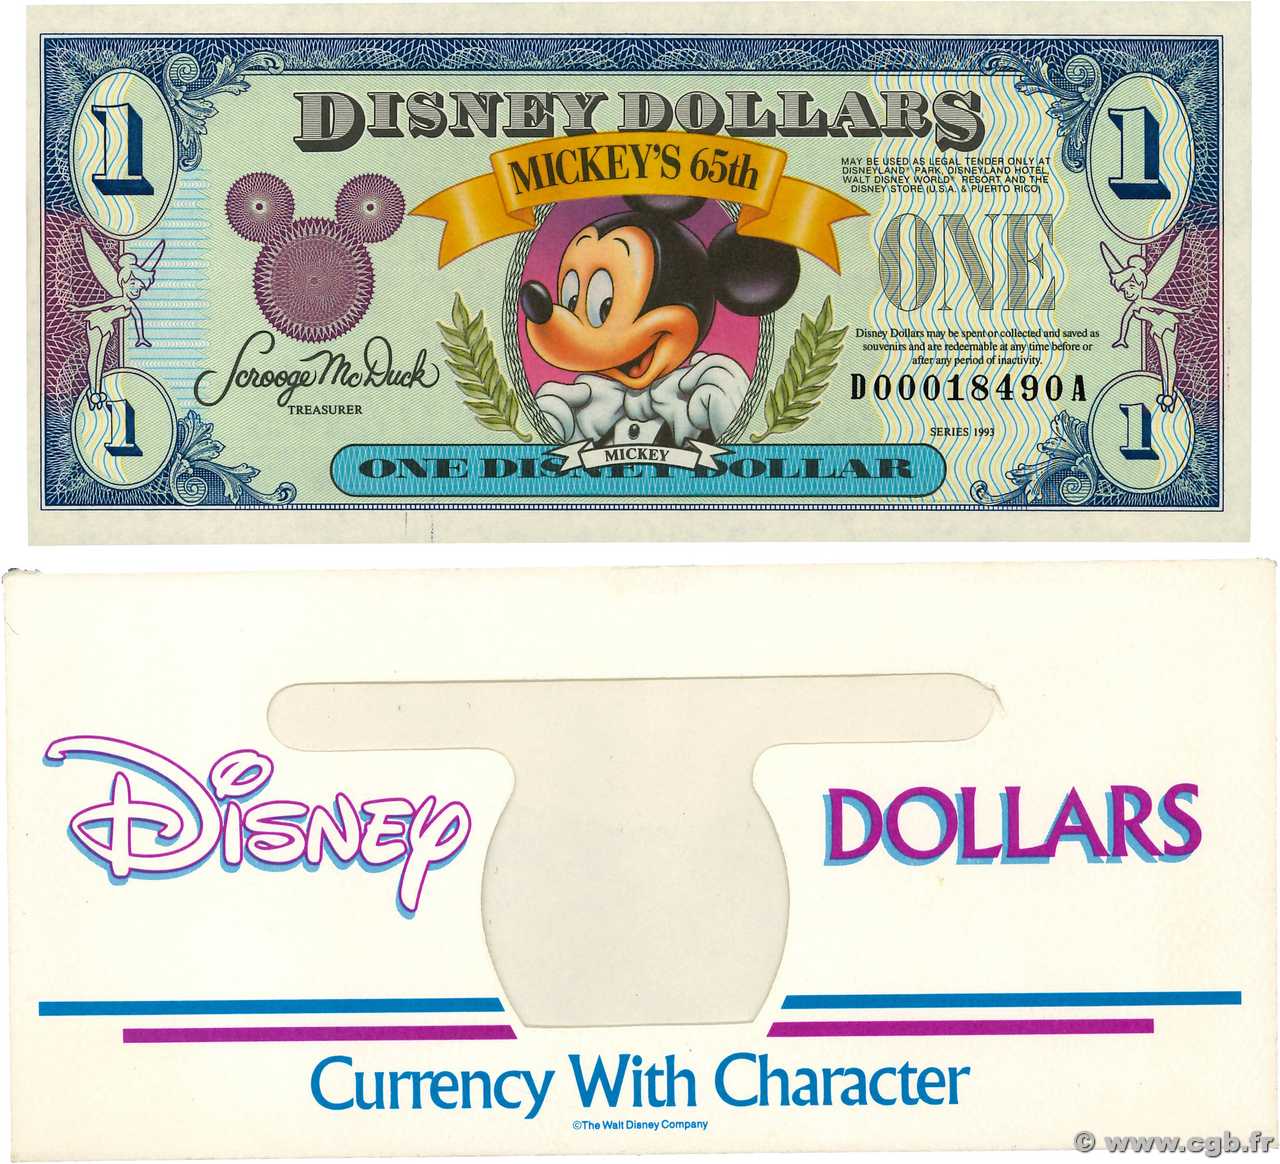 1 Disney dollar Commémoratif UNITED STATES OF AMERICA  1993  UNC